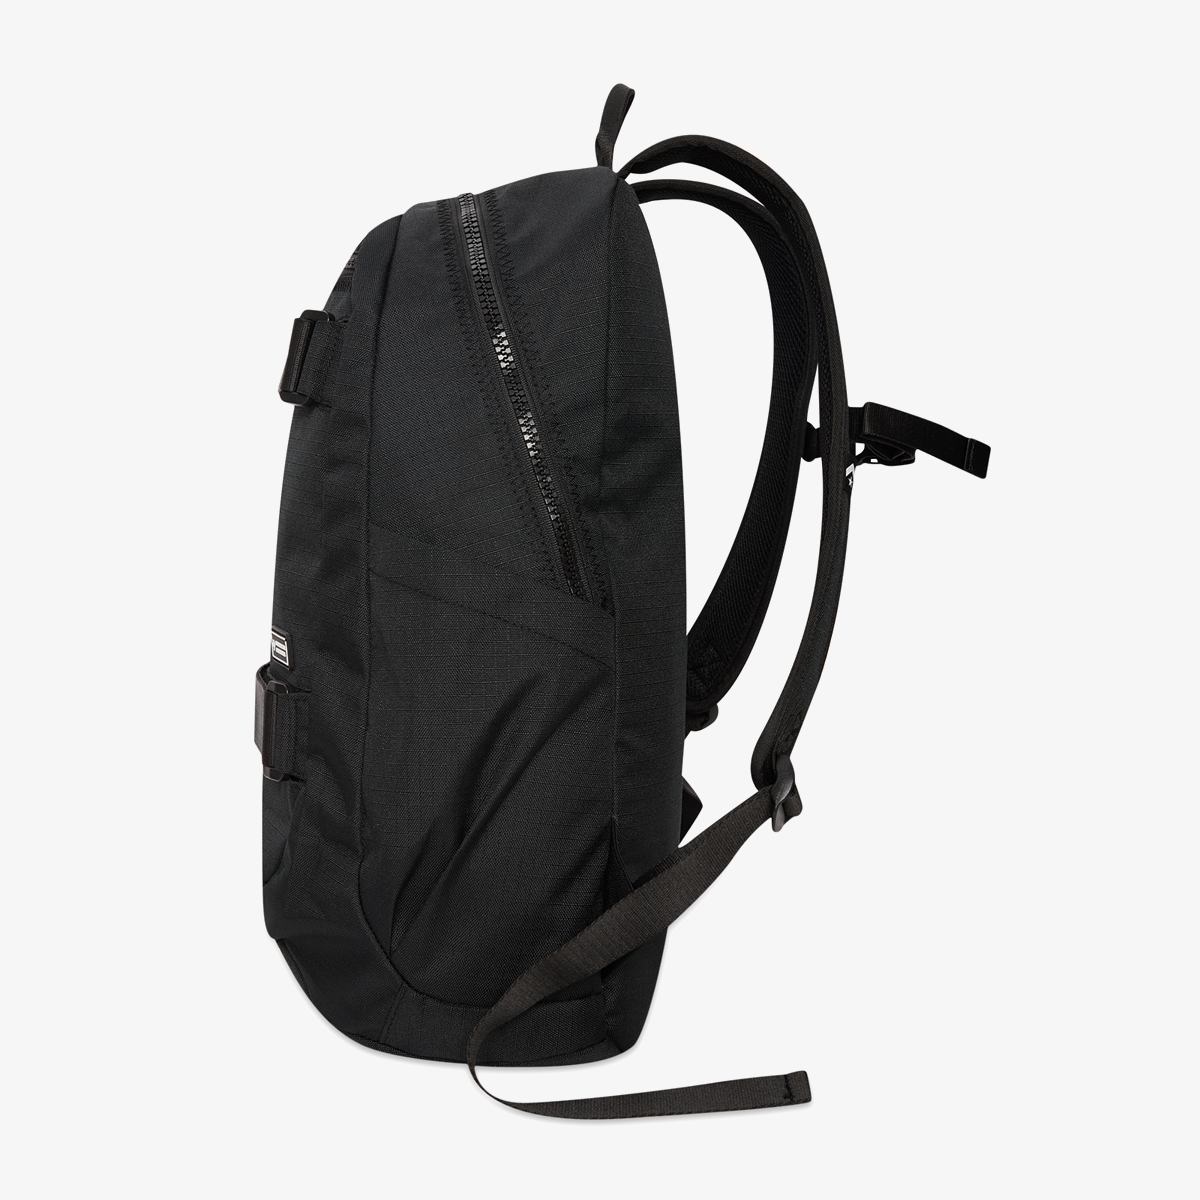 Рюкзак Converse Utility Backpack